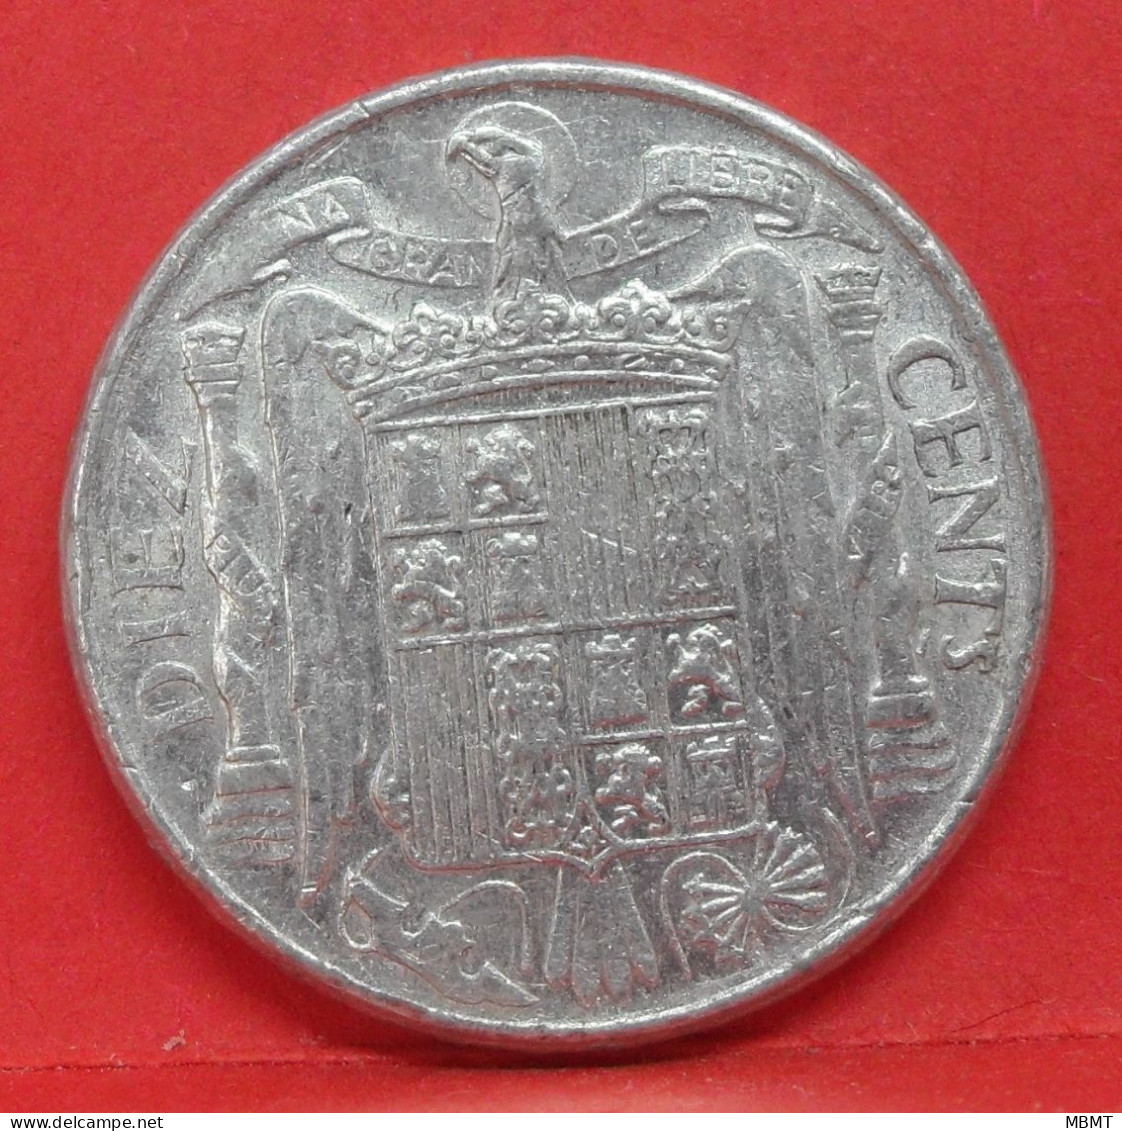 10 Centimos 1953 - TTB - Pièce Monnaie Espagne - Article N°2207 - 10 Centimos